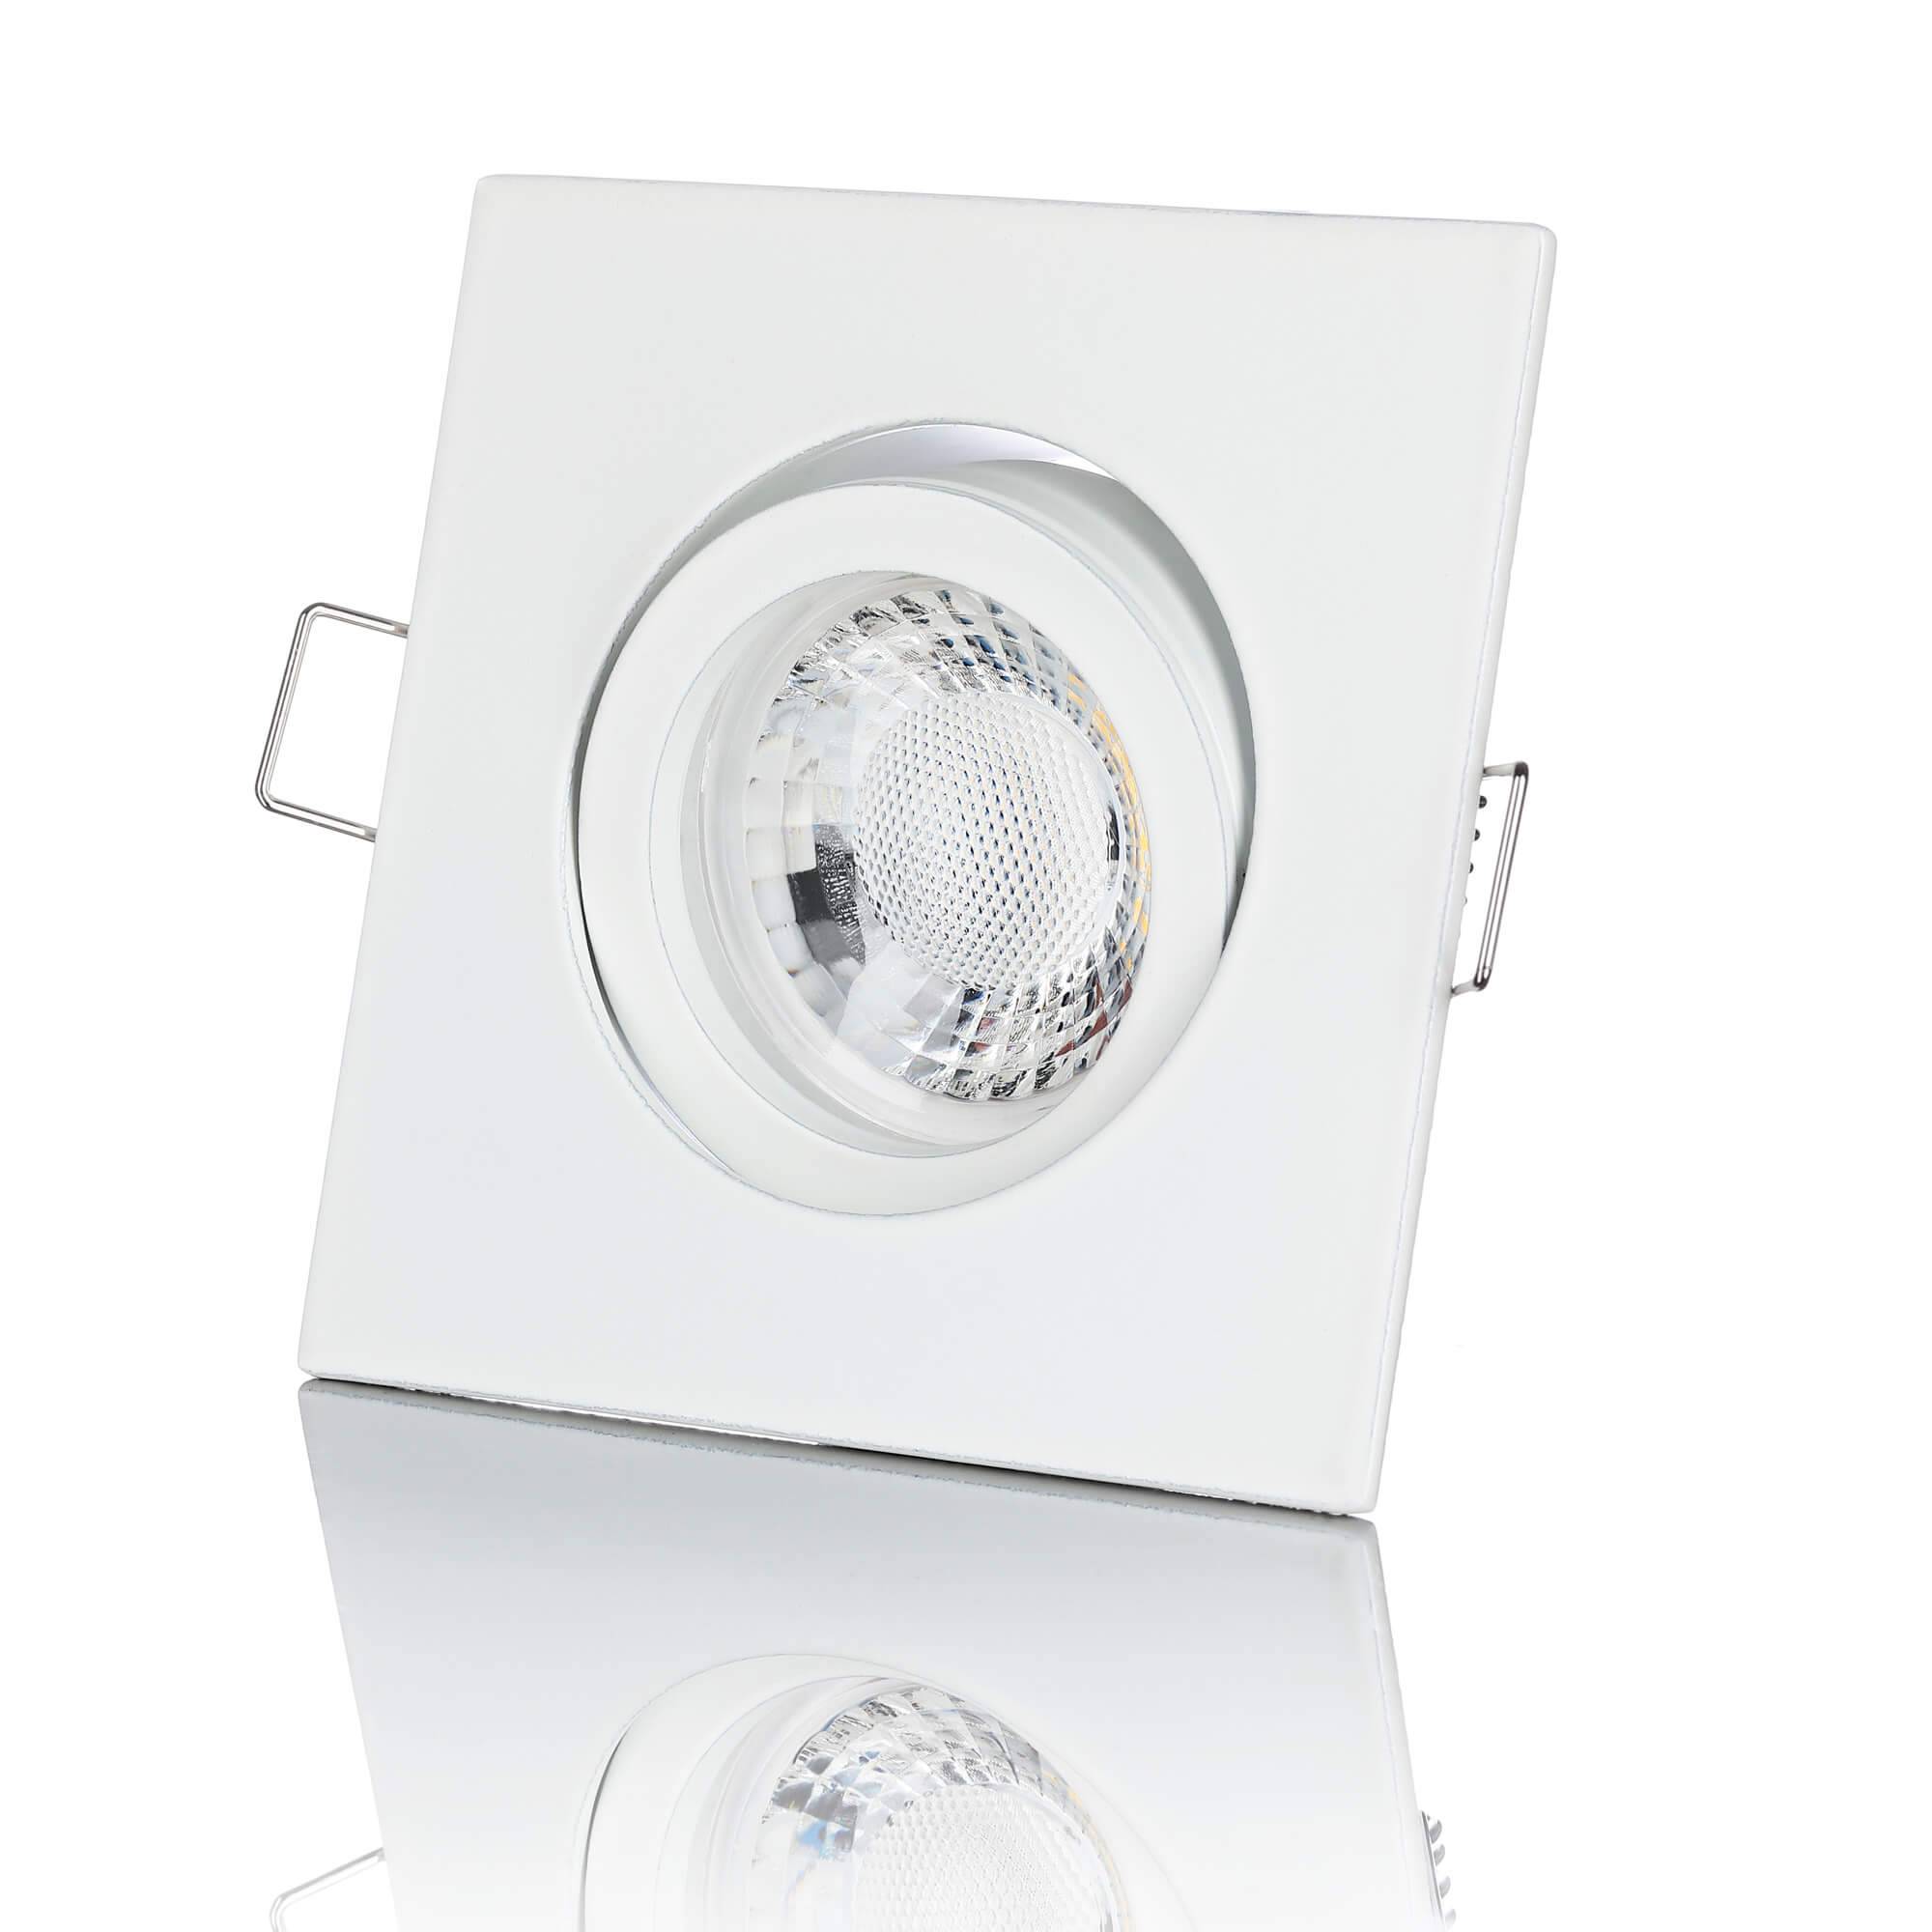 LED Einbaustrahler Dimmbar - Weiß Eckig 5W GU10 LED - Rapid